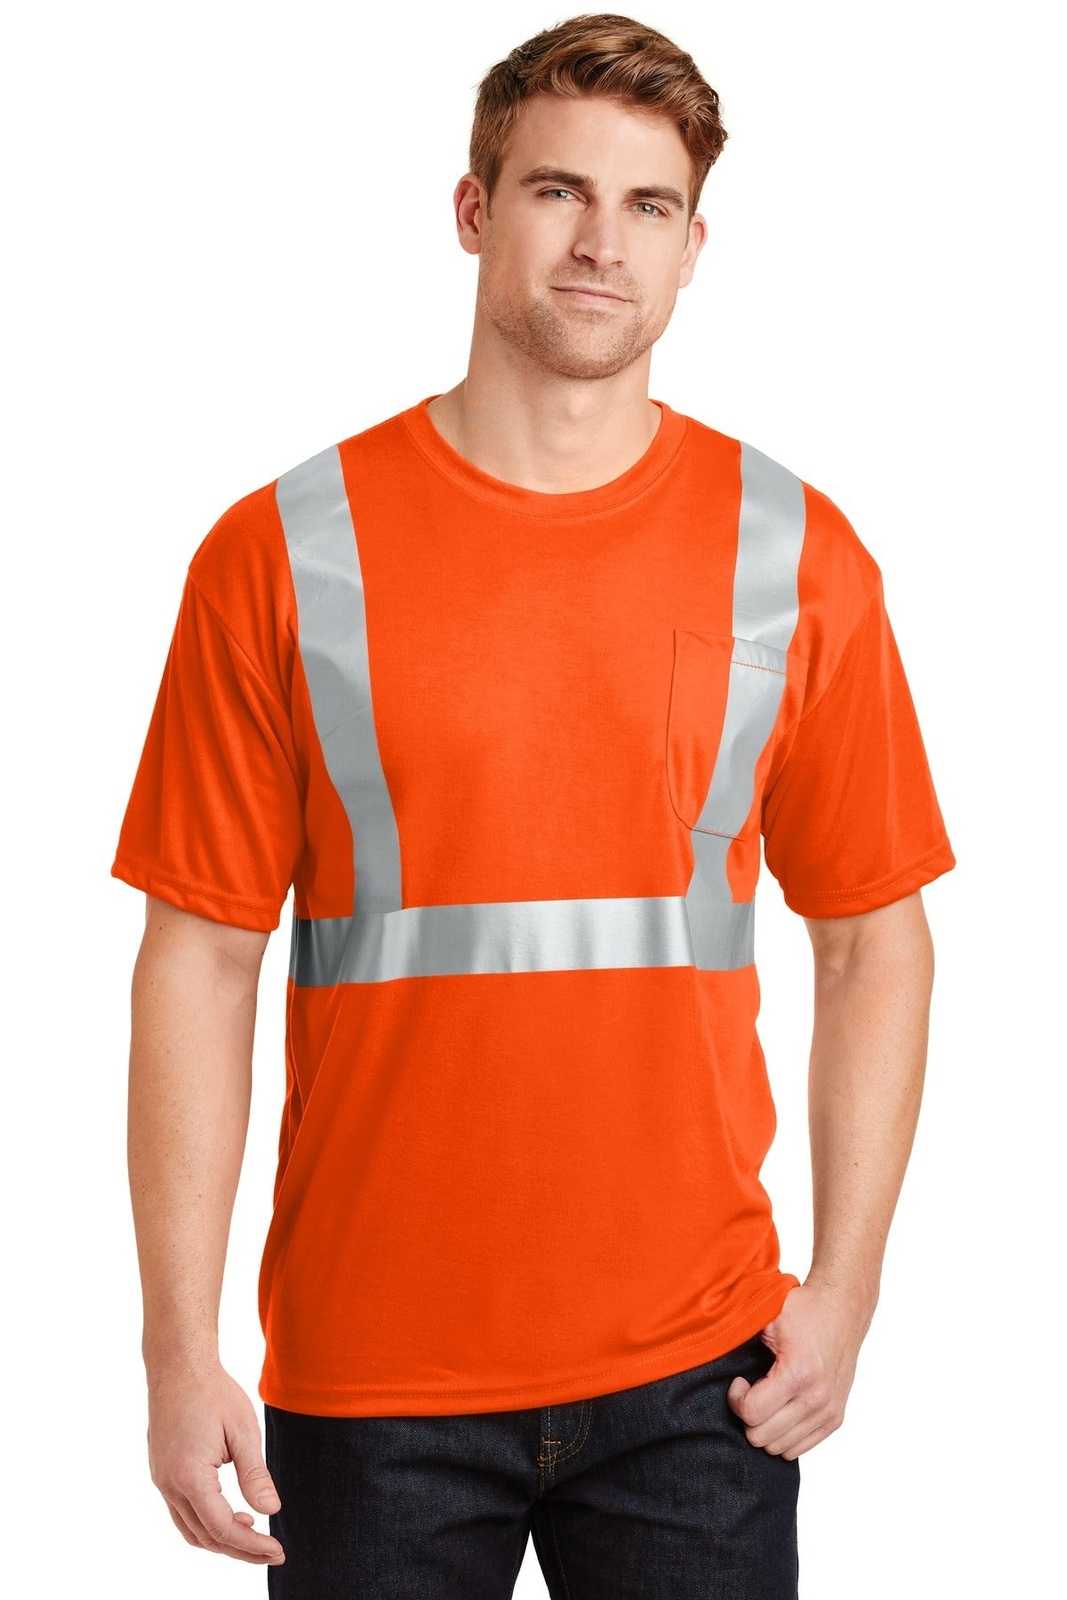 CornerStone CS401 ANSI 107 Class 2 Safety T-Shirt - Safety Orange Reflective - HIT a Double - 1